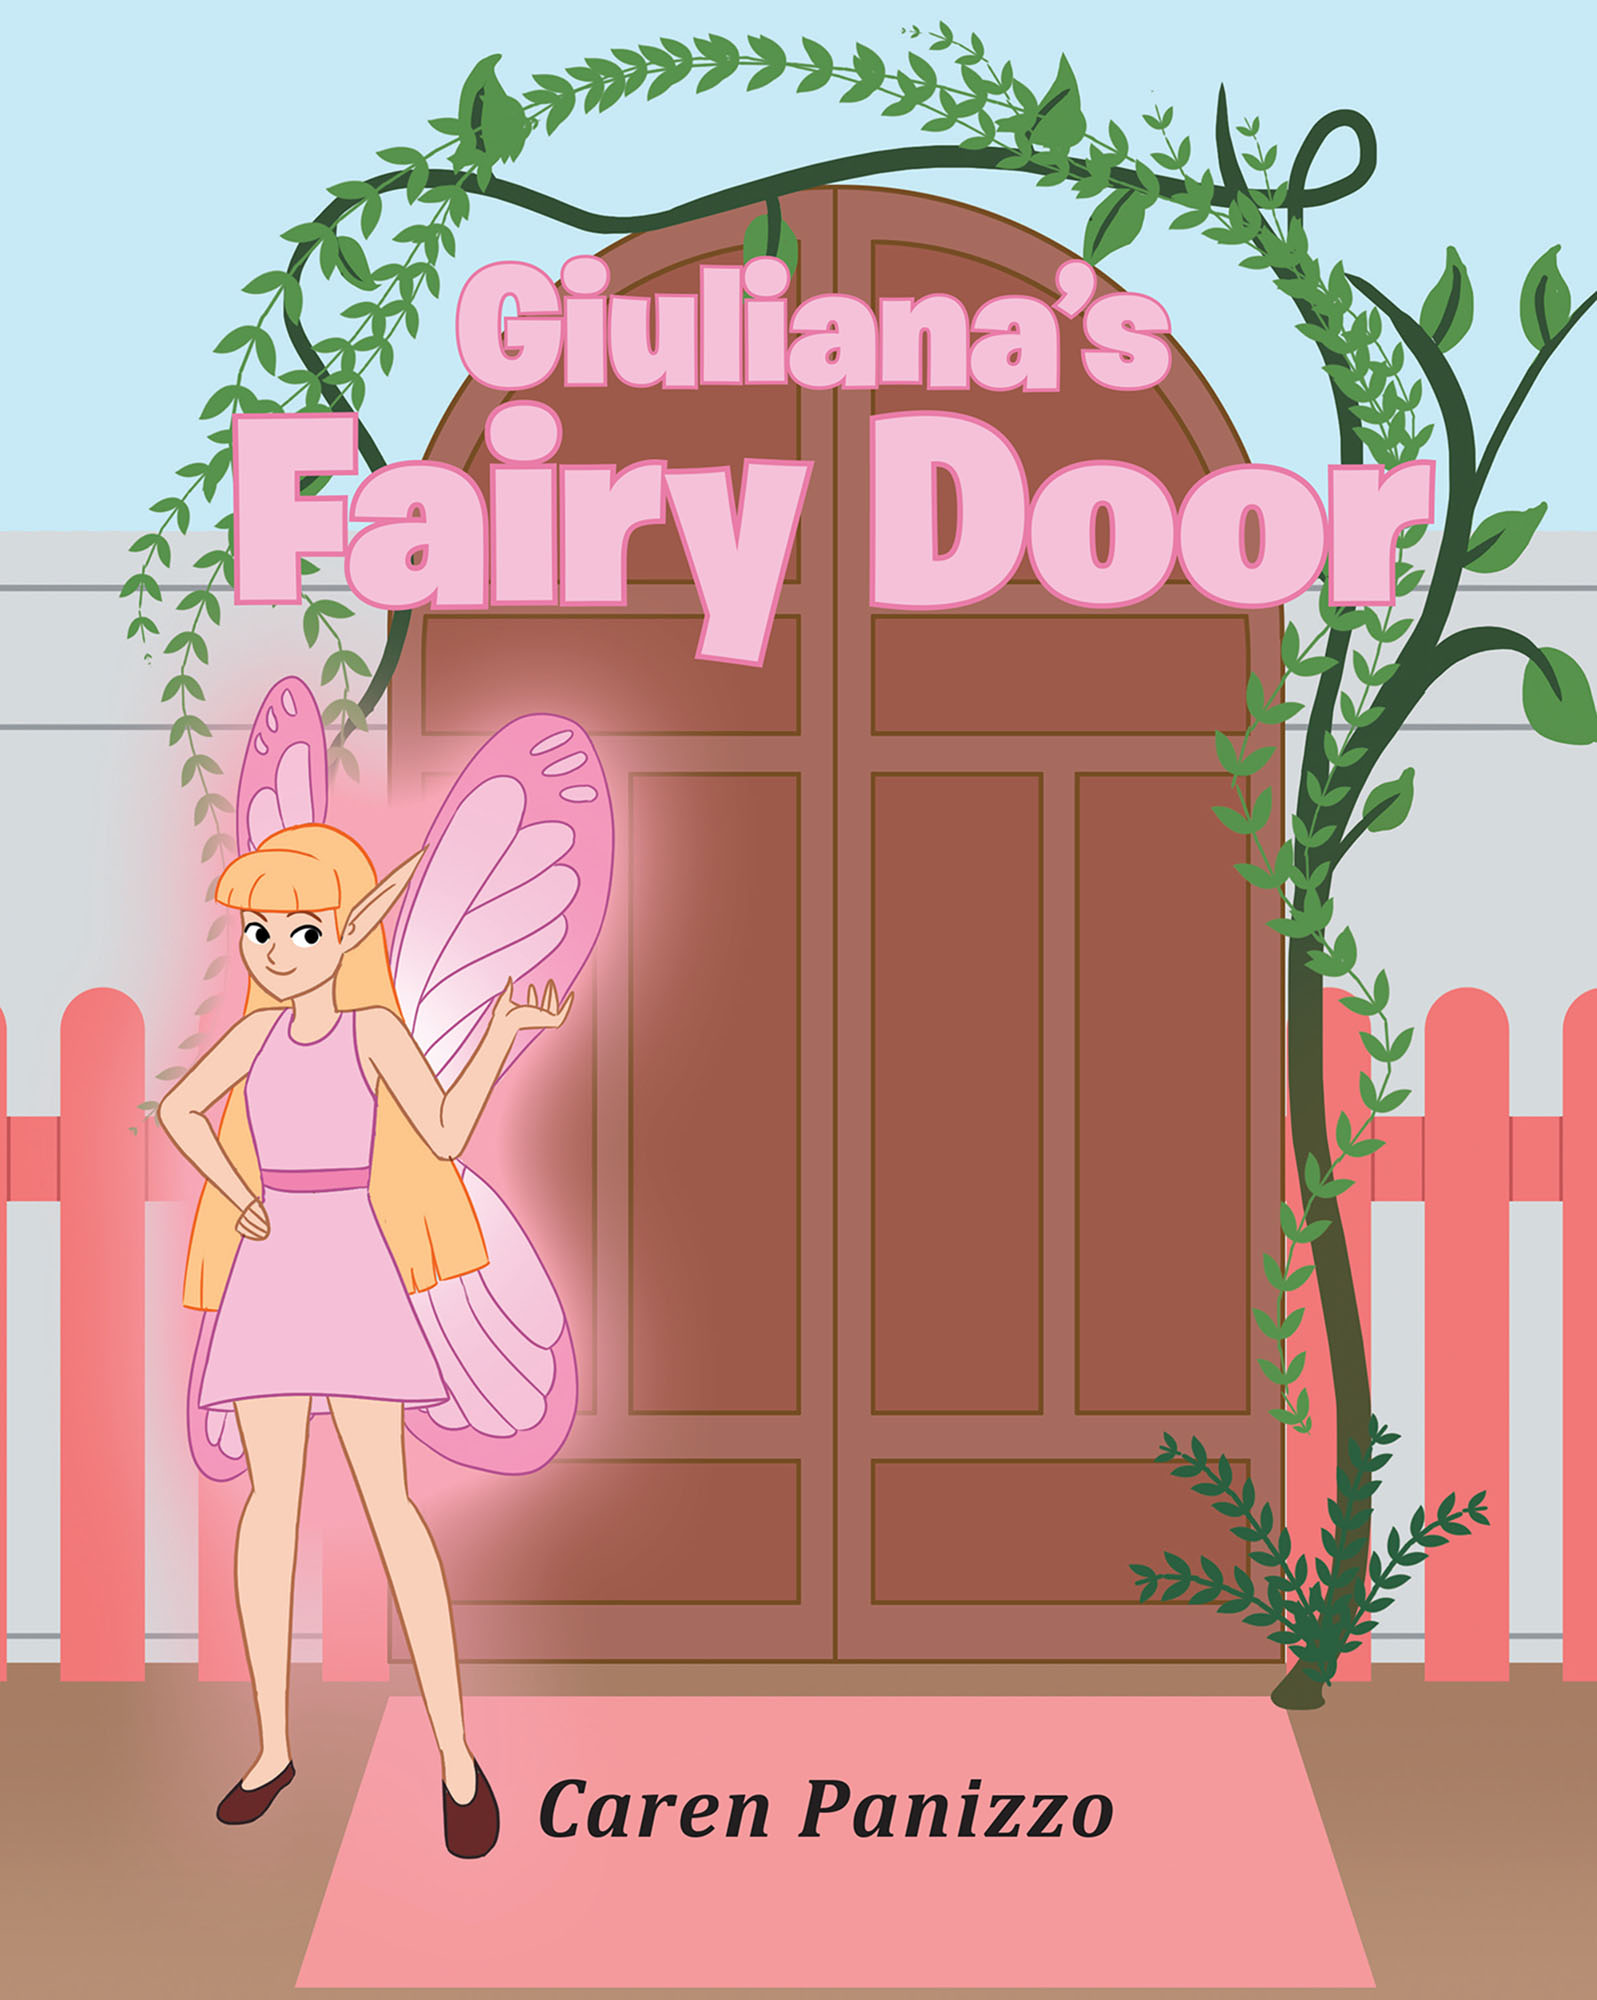 Giuliana's Fairy Door Cover Image